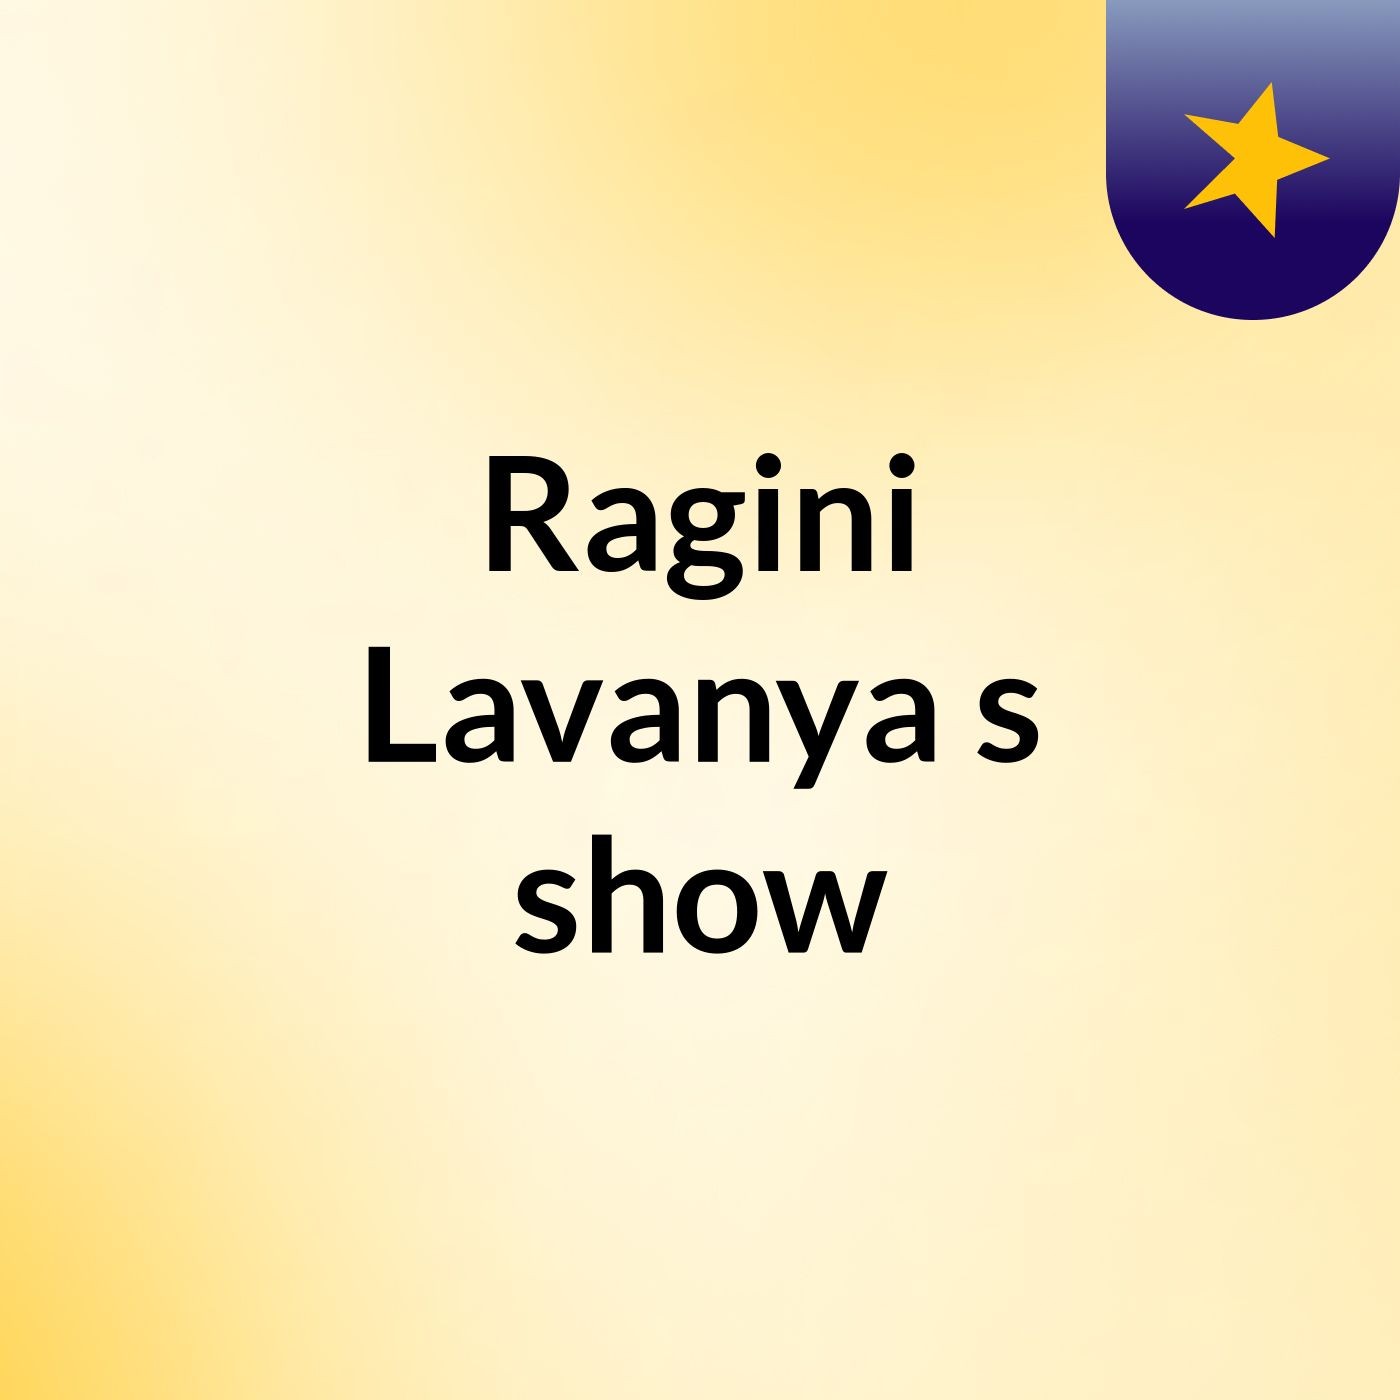 Ragini Lavanya's show